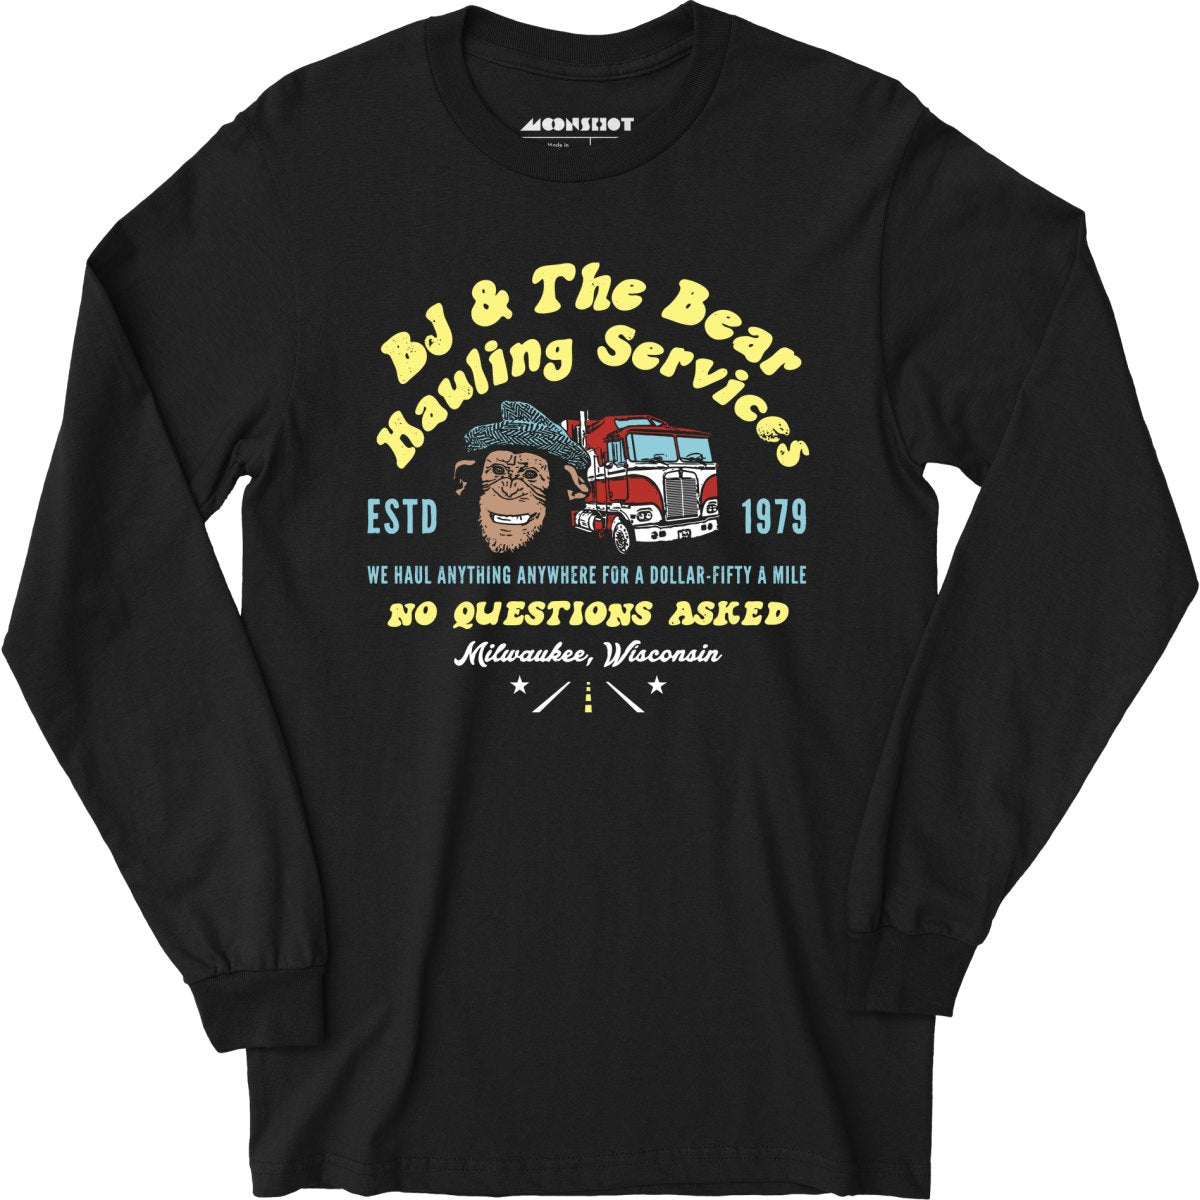 BJ & The Bear Hauling Services - Long Sleeve T-Shirt